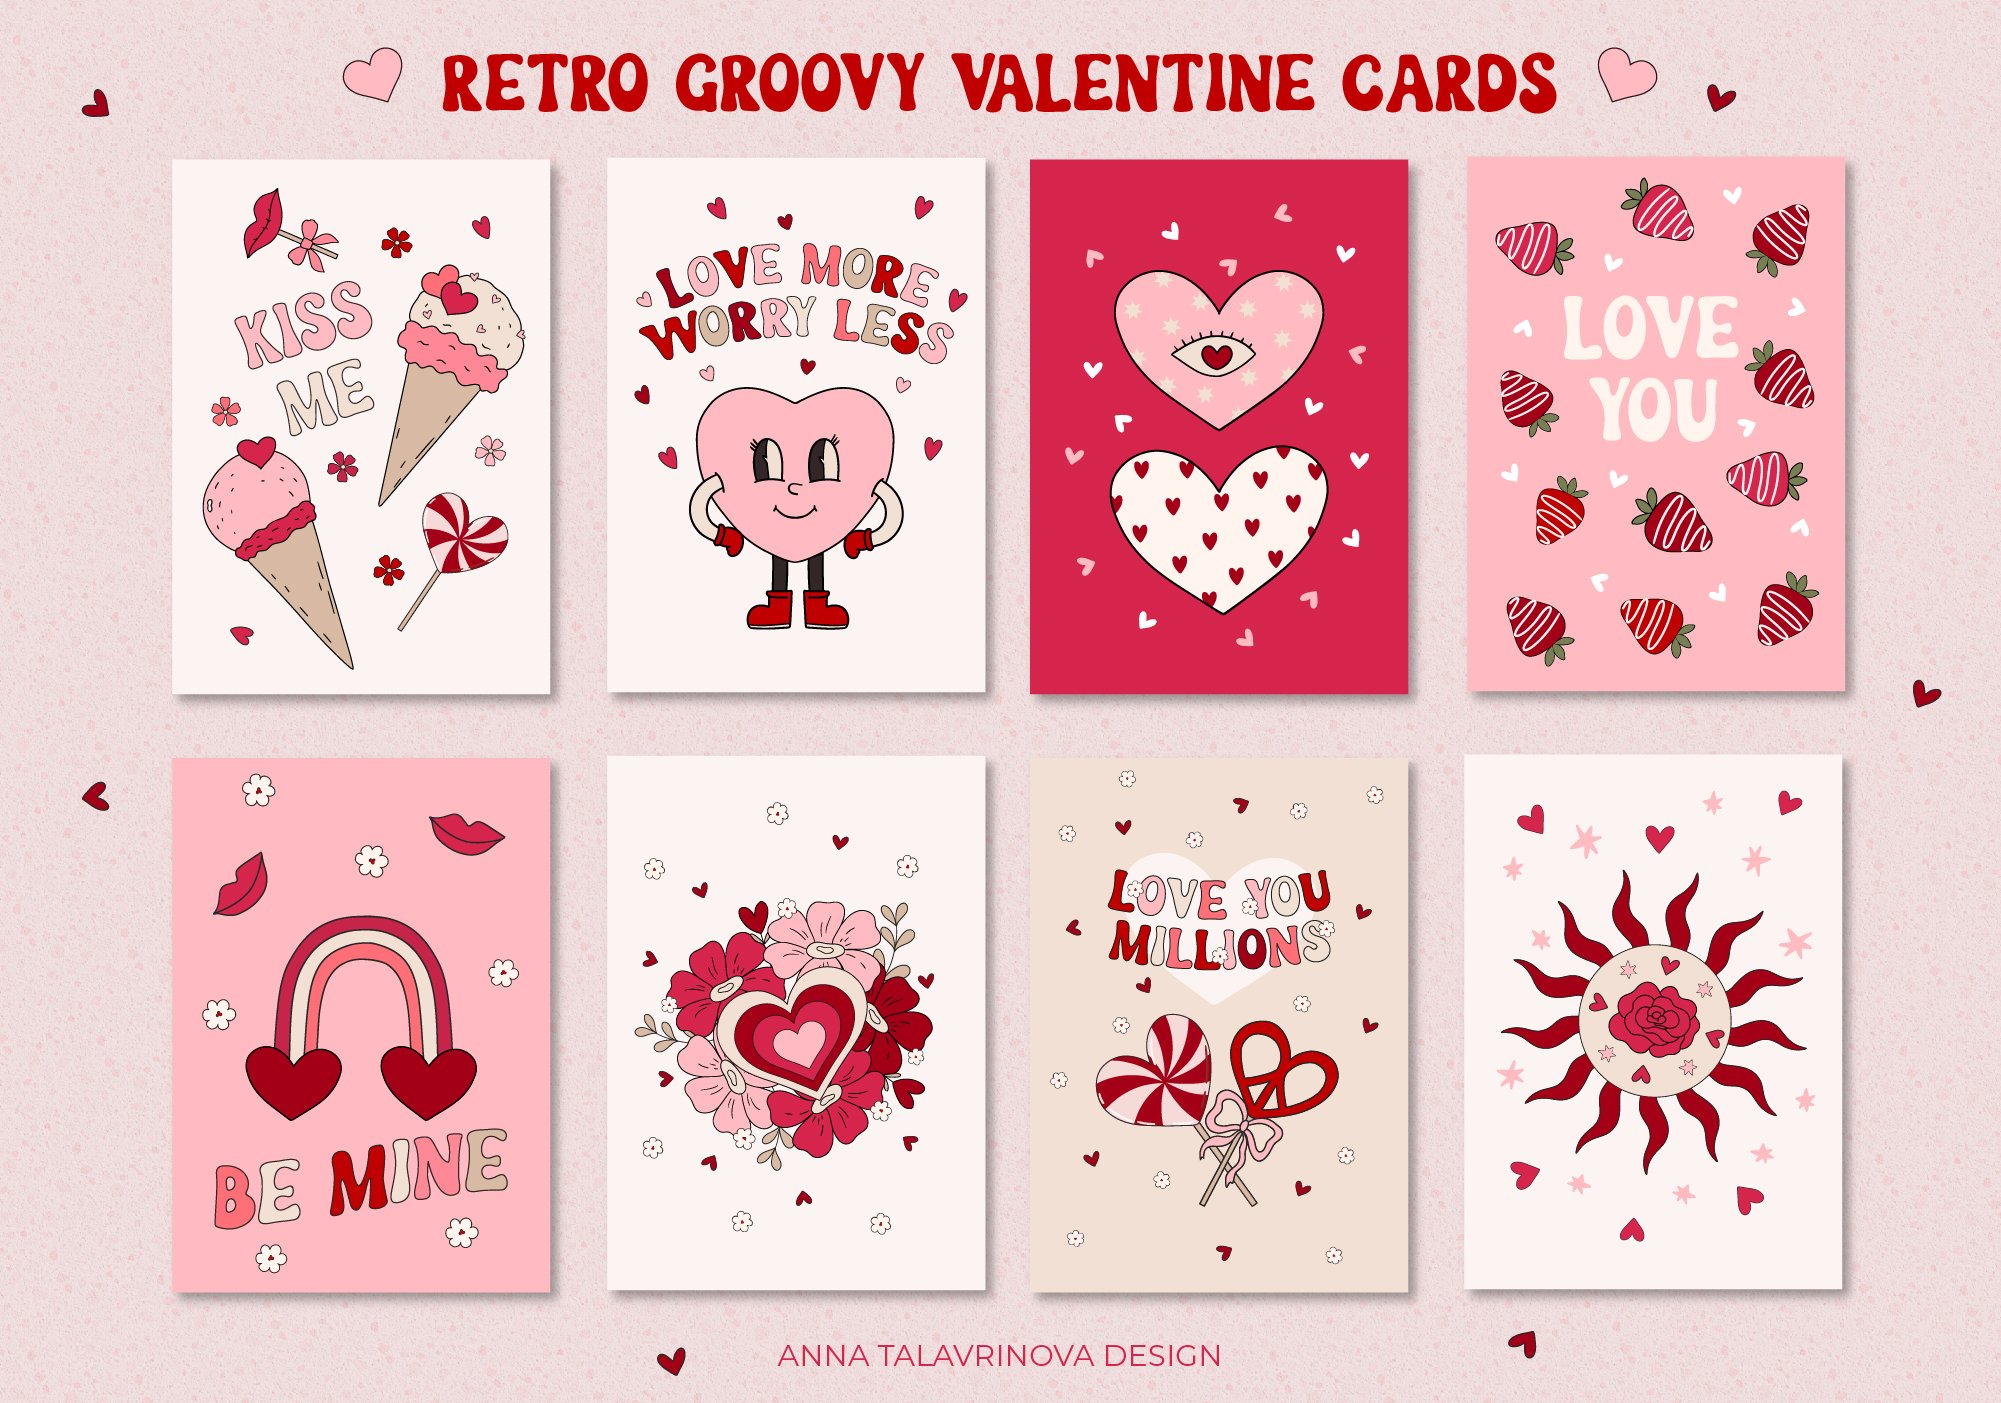 Retro groovy Valentine cards.